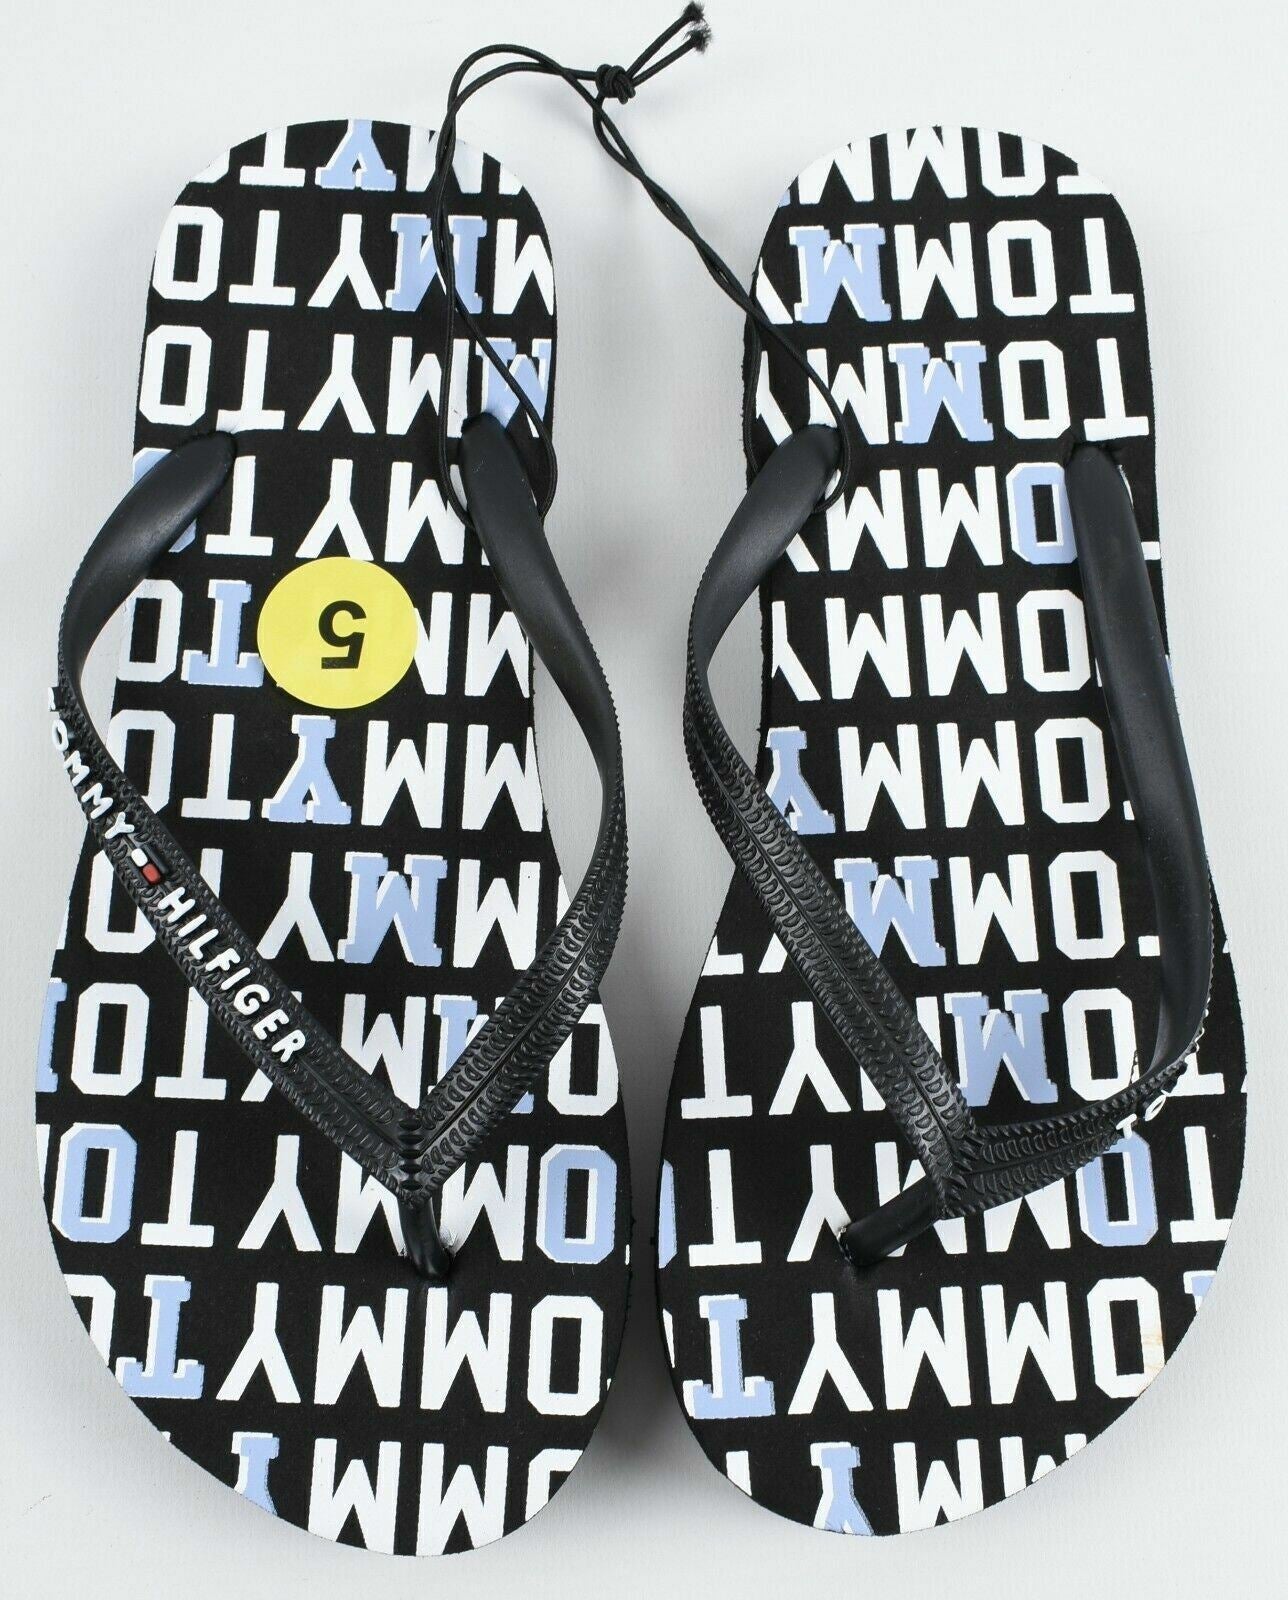 TOMMY HILFIGER Women's DANE-R Flip Flops Sandals, Black/White, size UK 2.5